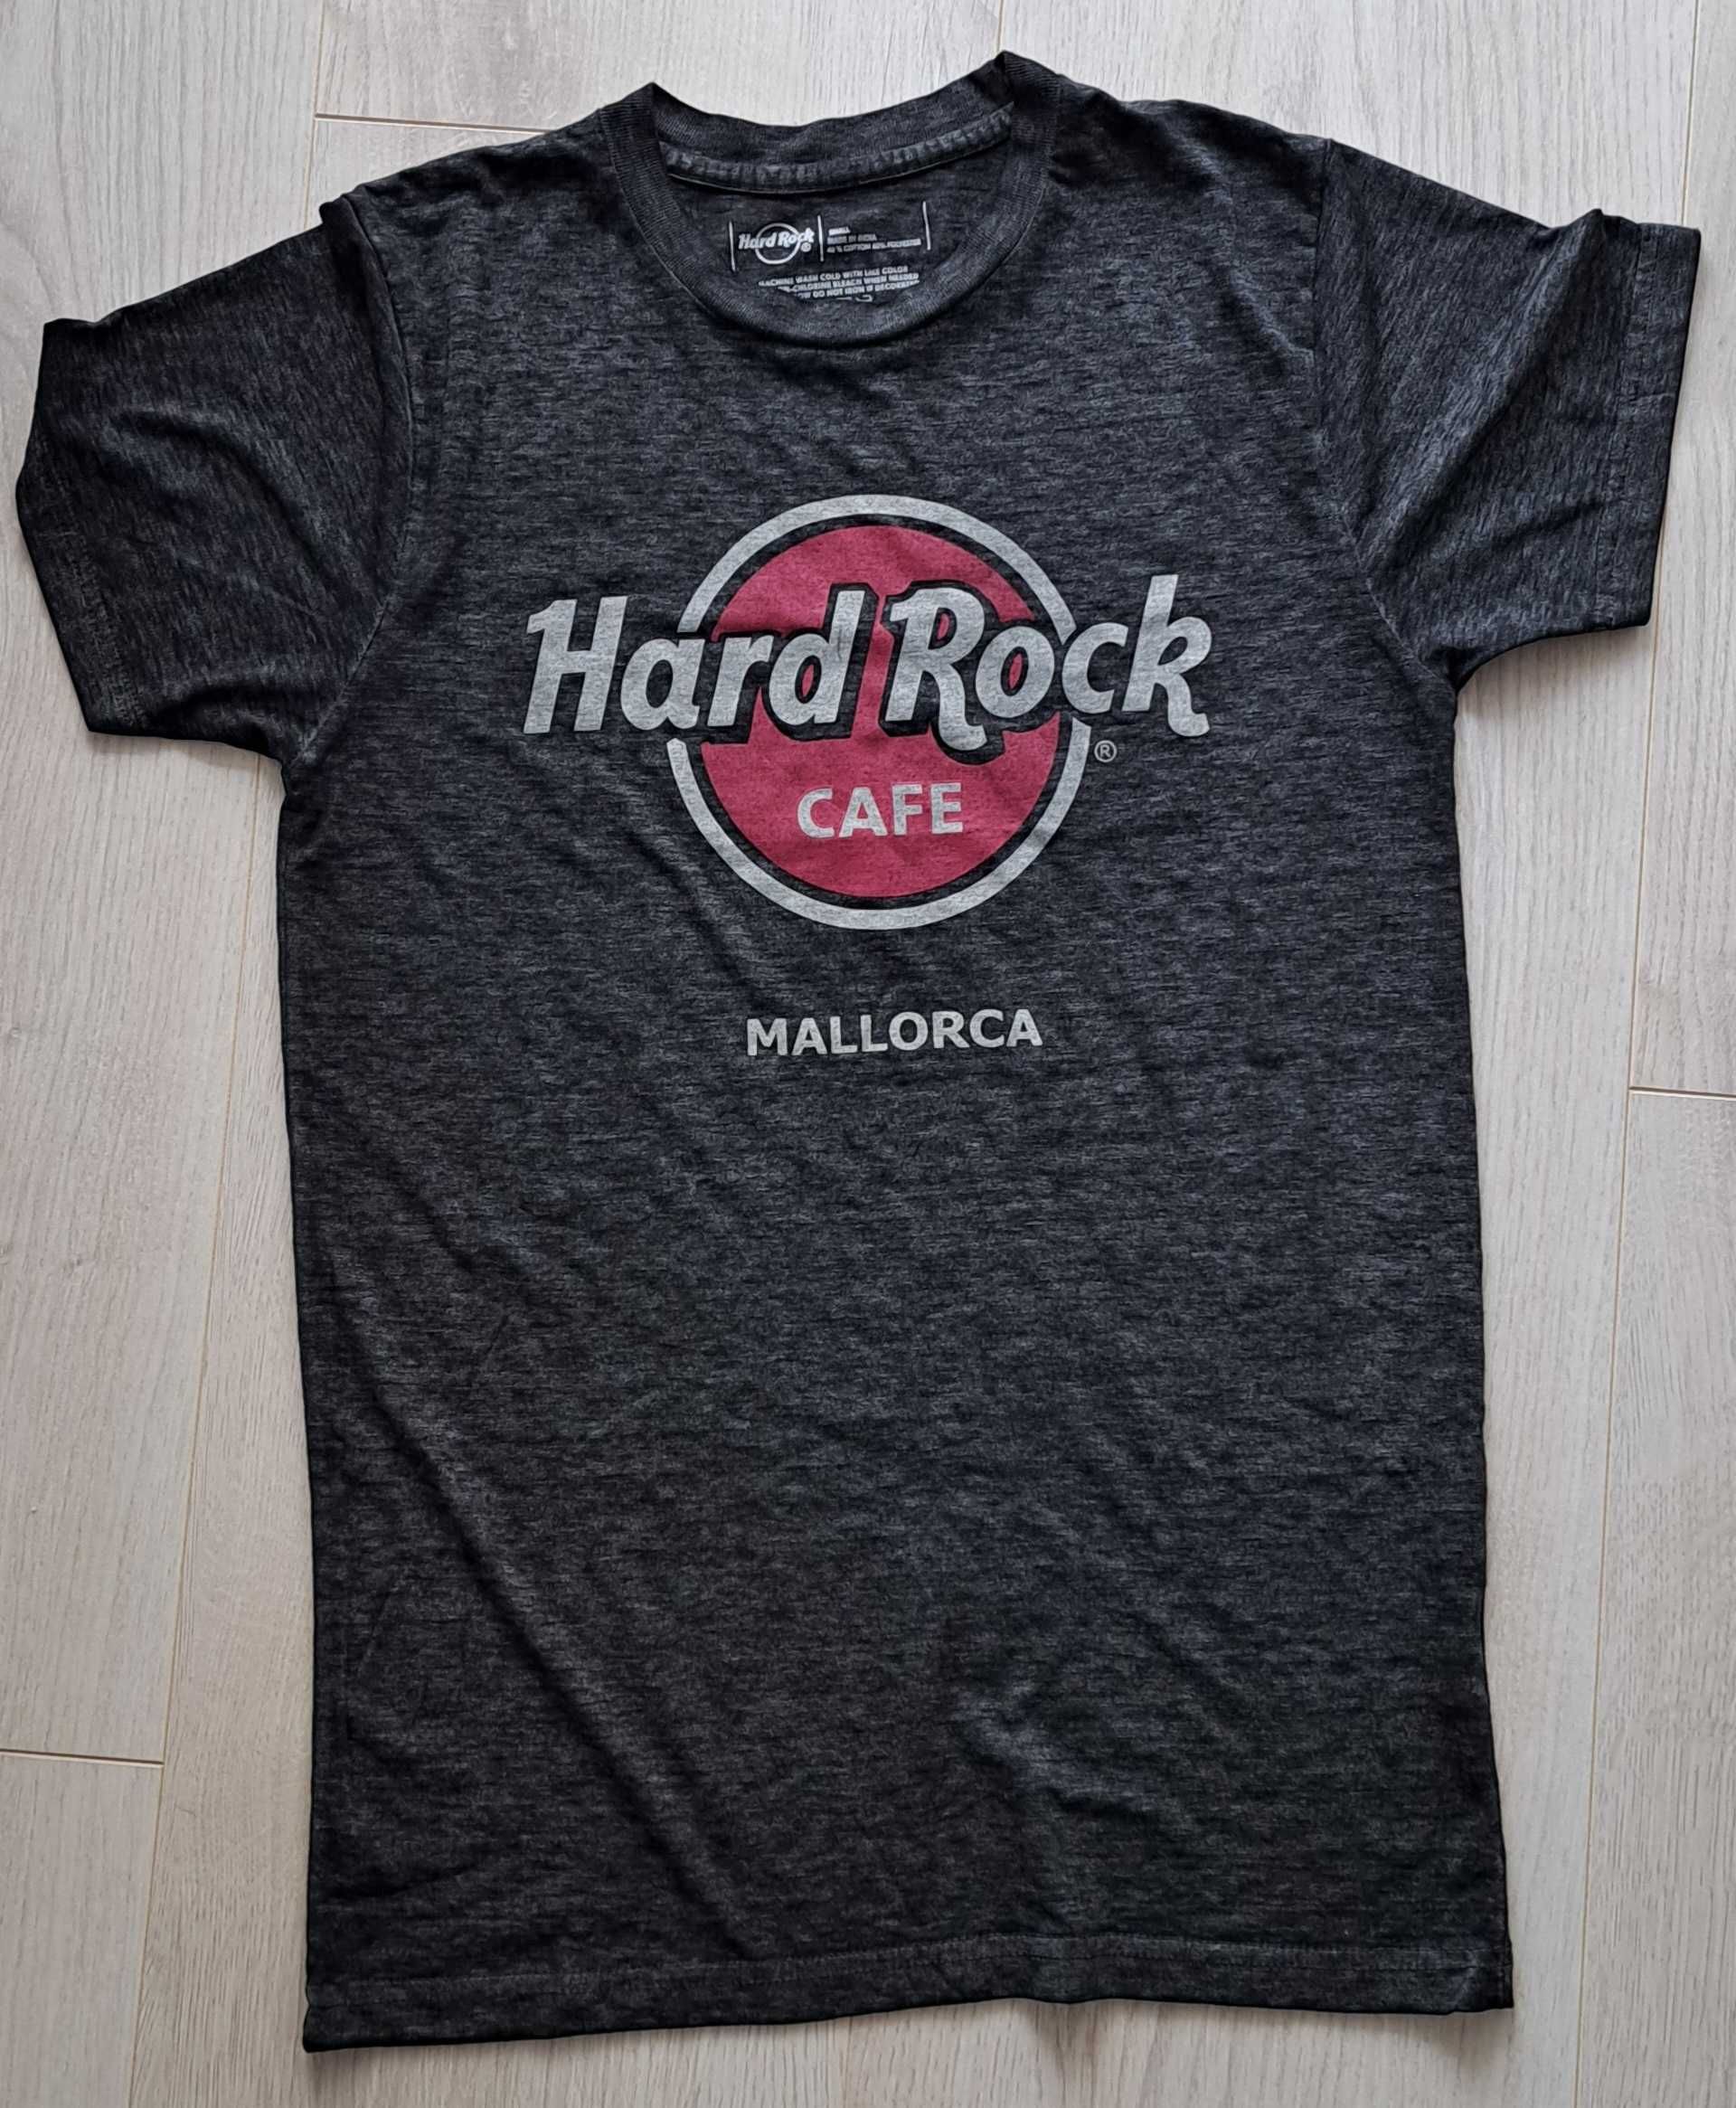 Hard Rock cafe tricou S Mallorca